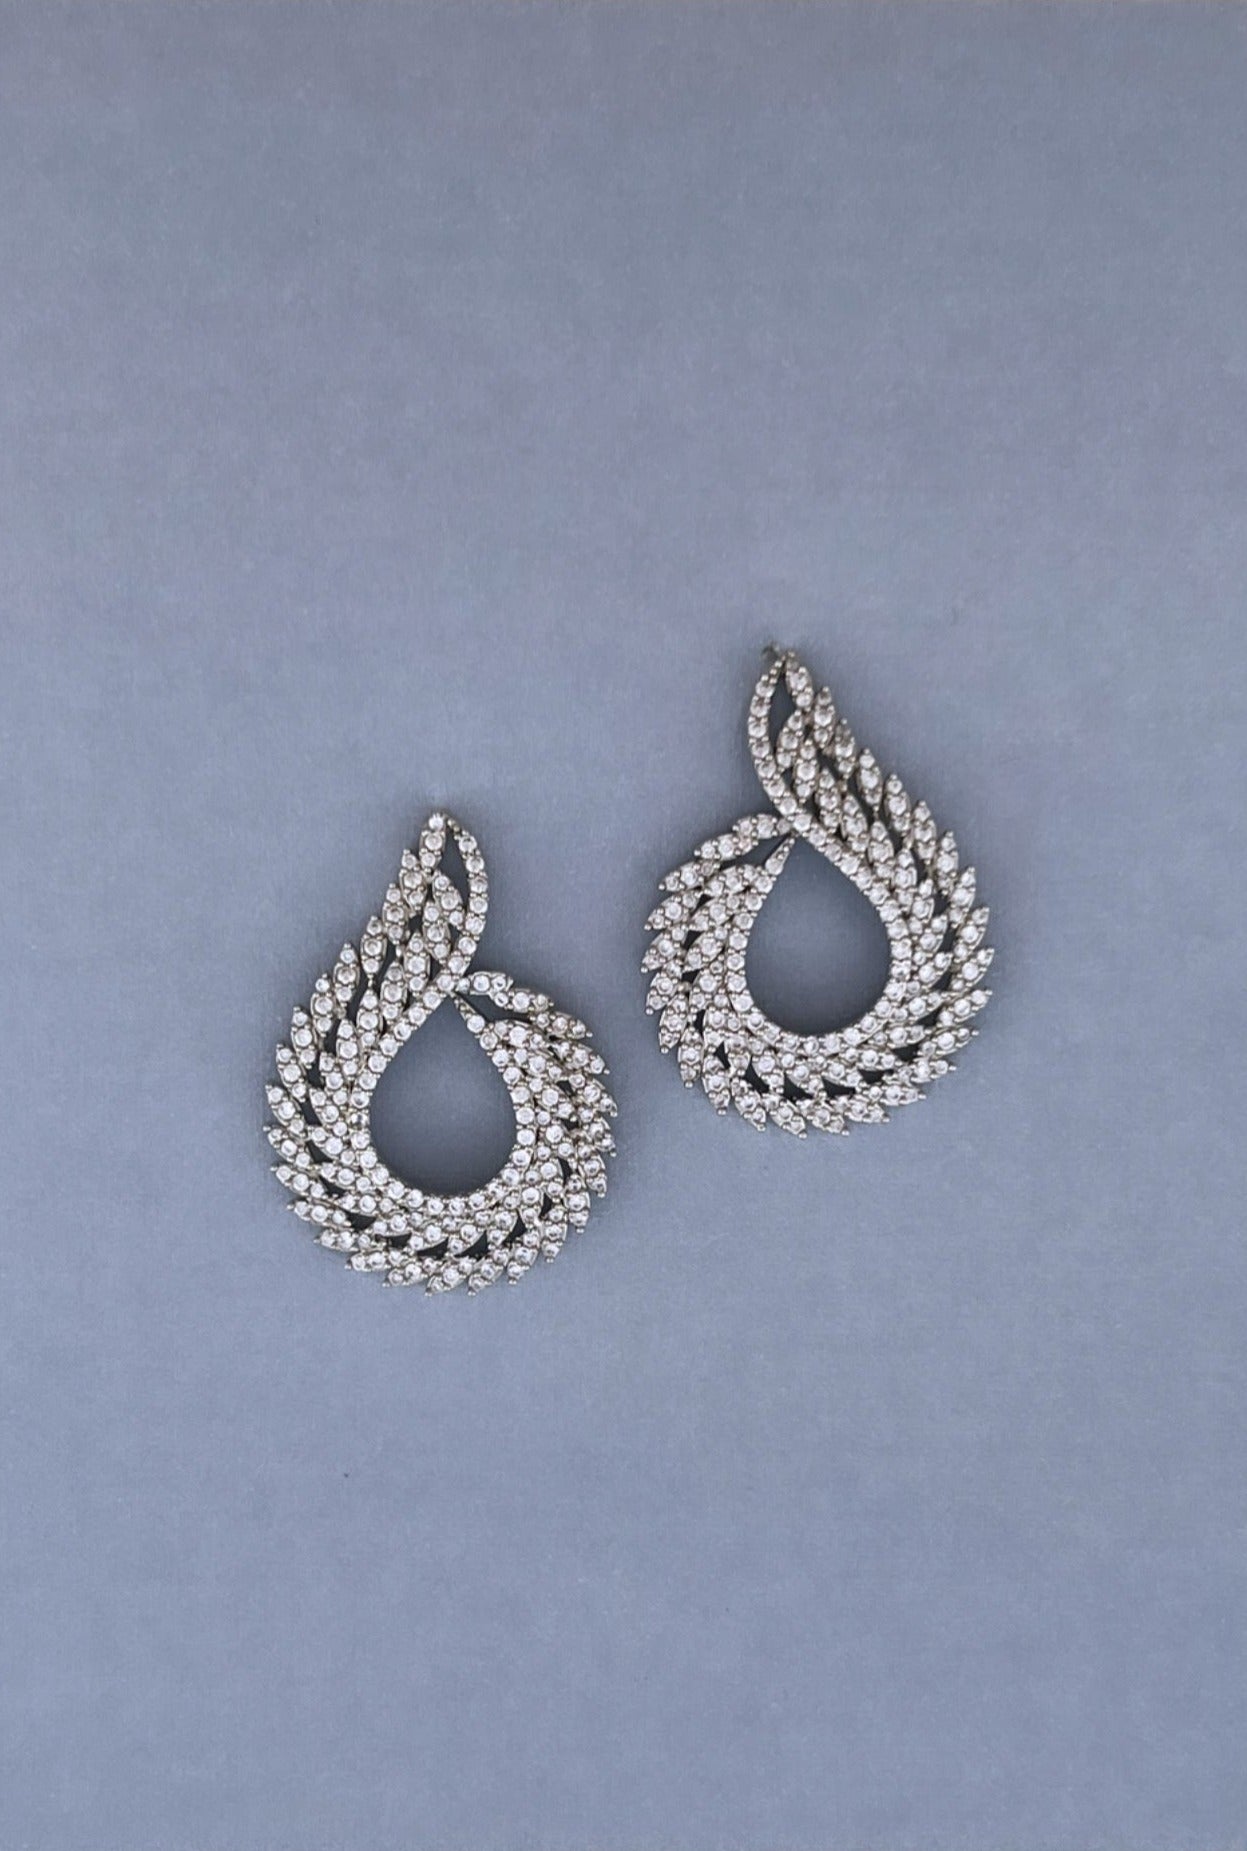 DAZZLIN Earrings with Swarovski Crystals